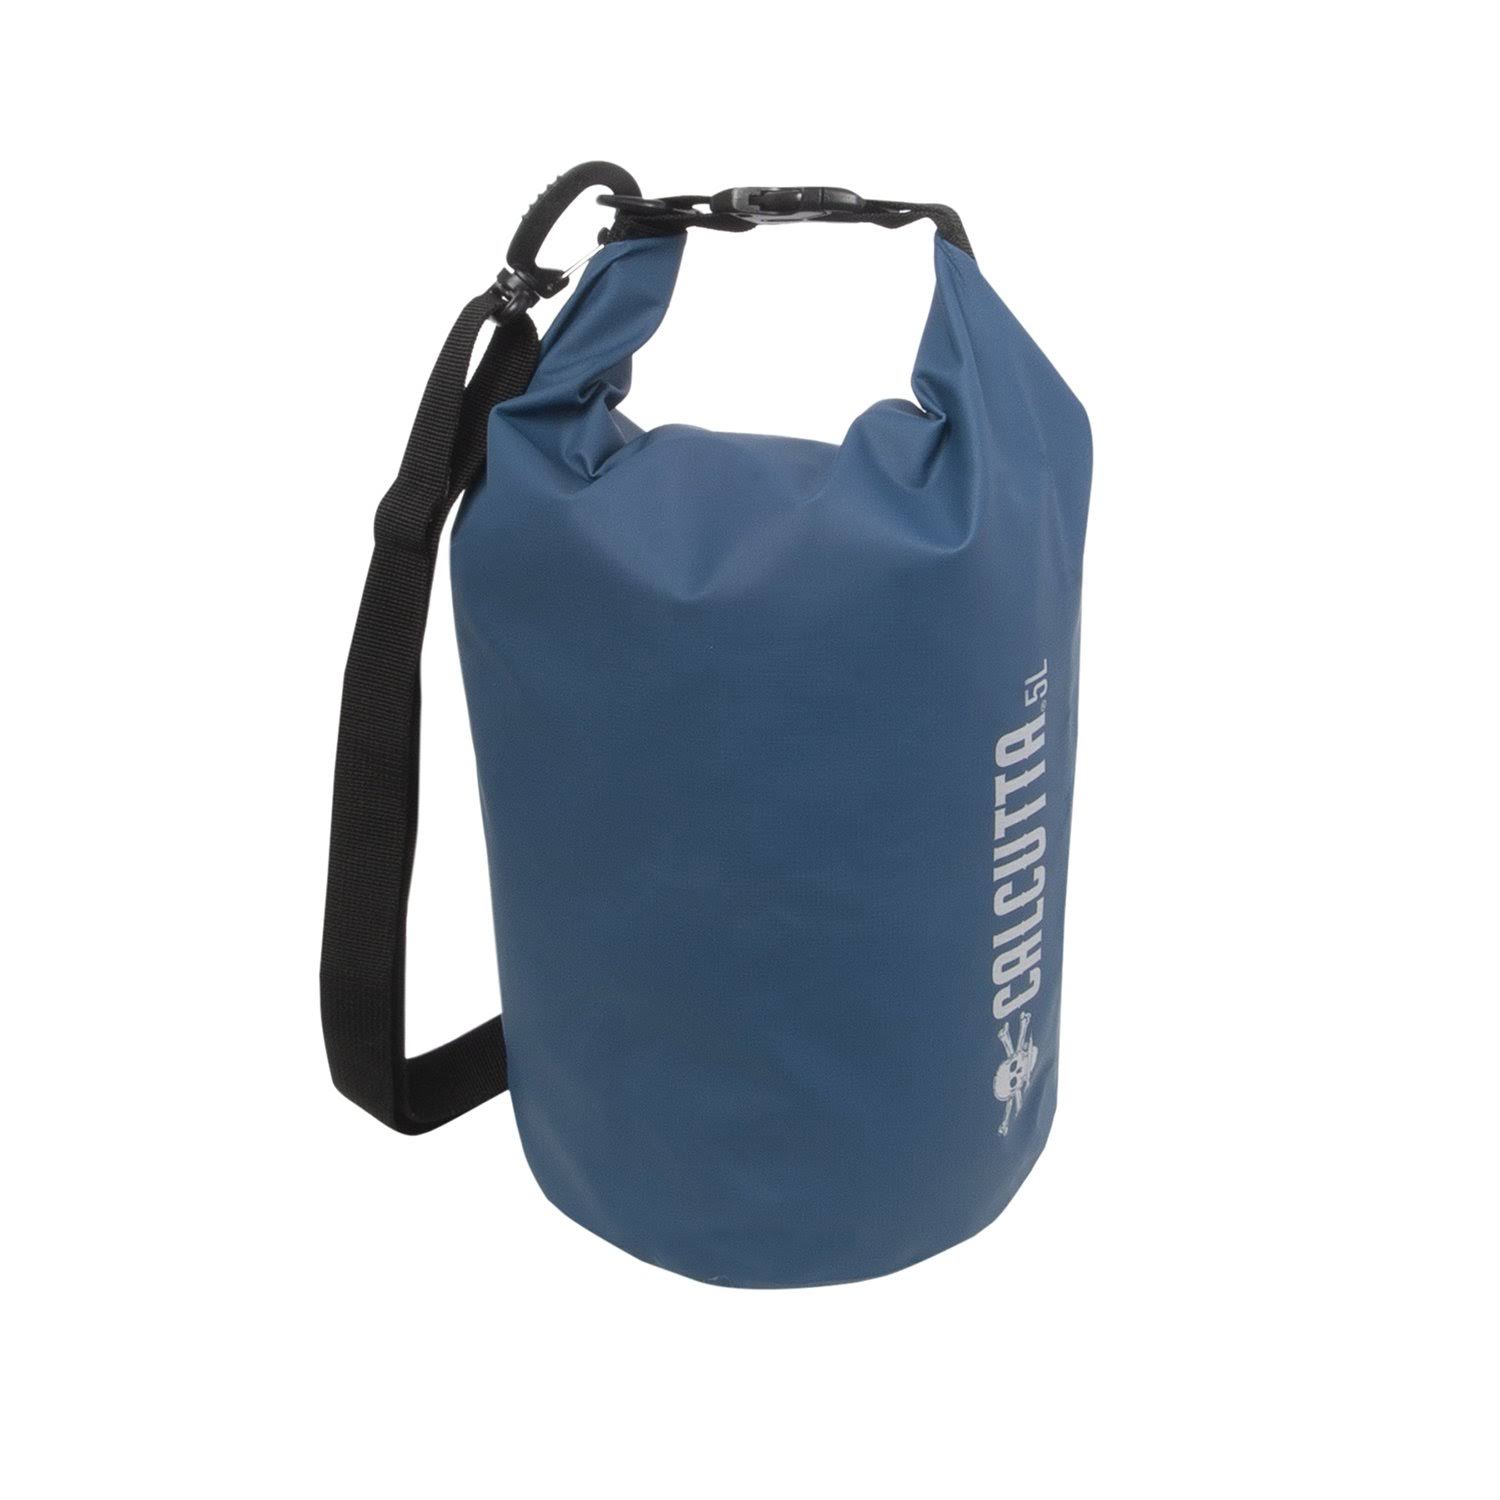 Calcutta Waterproof Dry Bag - 5 Liter